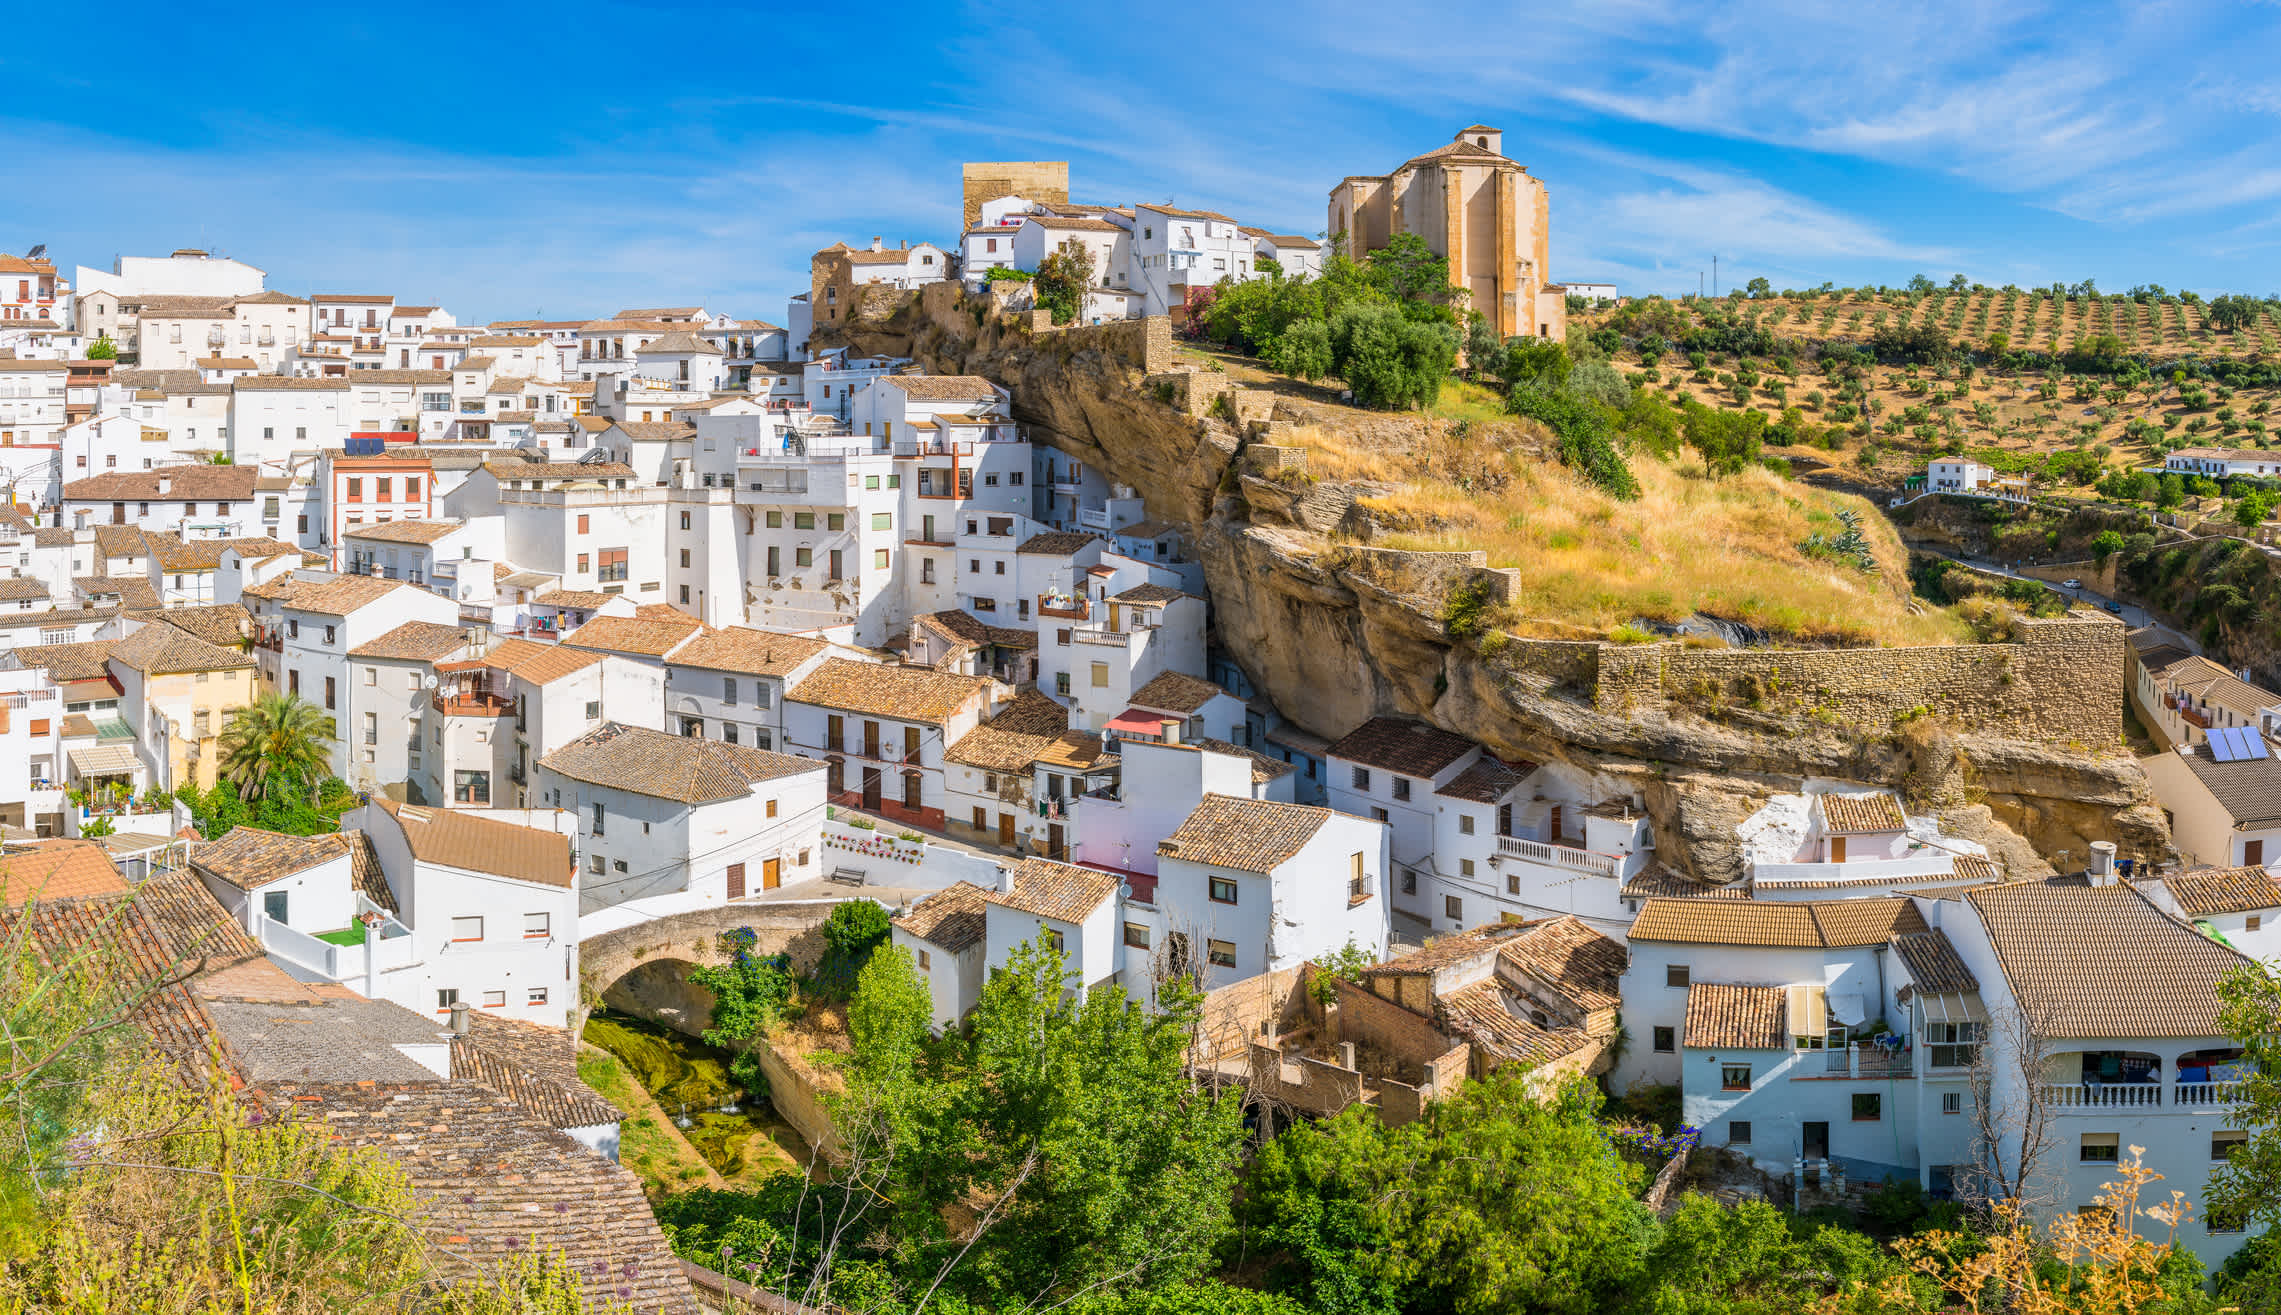 Das Panorama vom Dorf Setenil de las Bodegas, Provice von Cadiz, Andalusien, Spanien.